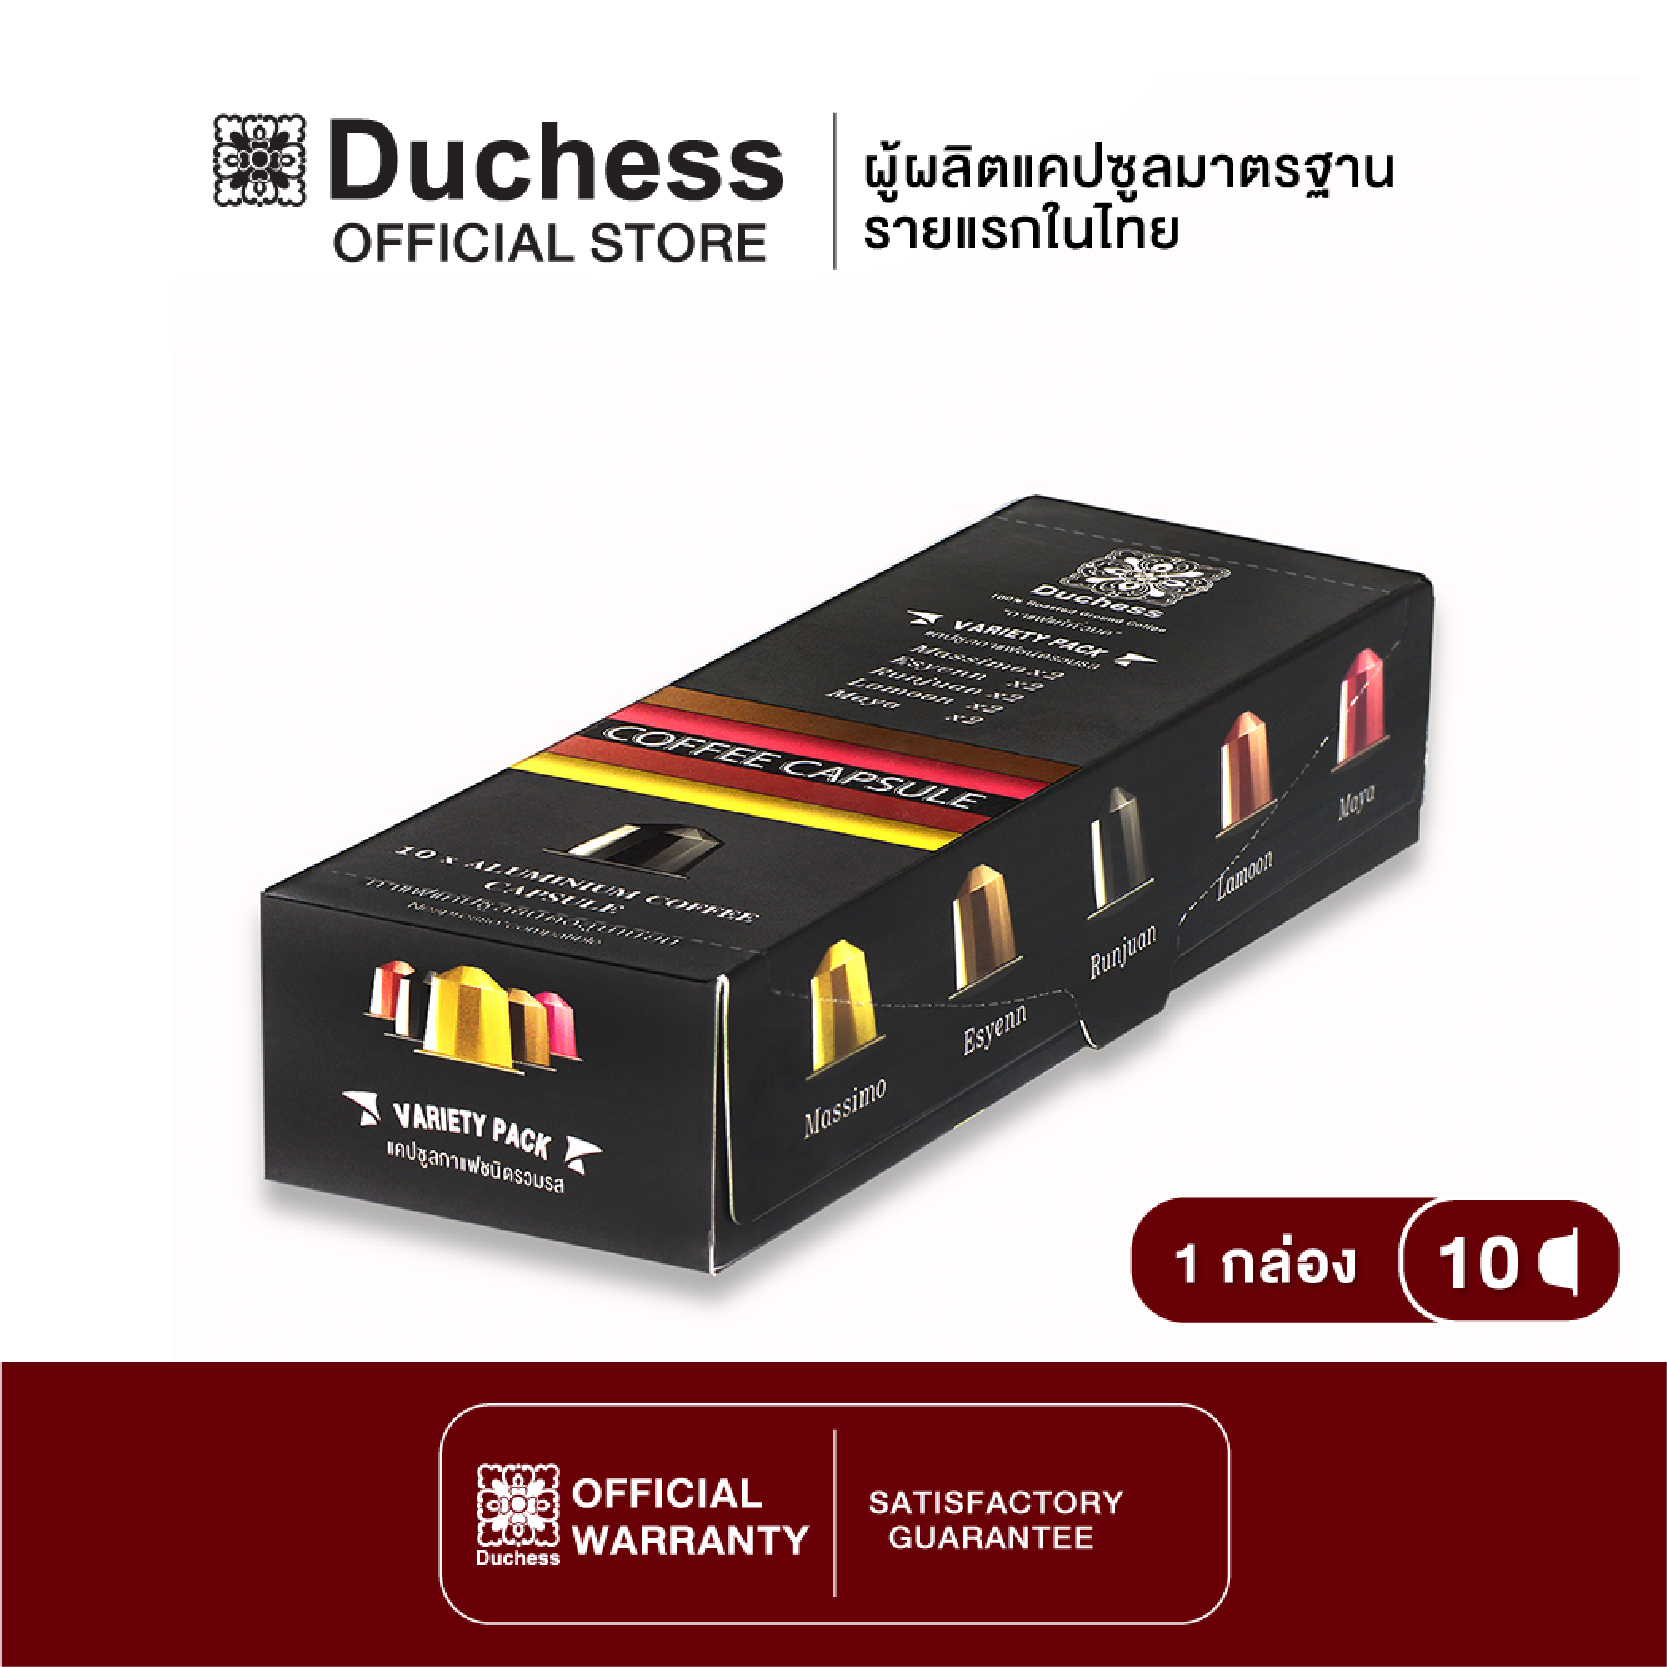 Duchess CO3000 - กาแฟแคปซูล 10 แคปซูล - คละรส (ใช้ได้กับเครื่อง Nespresso)